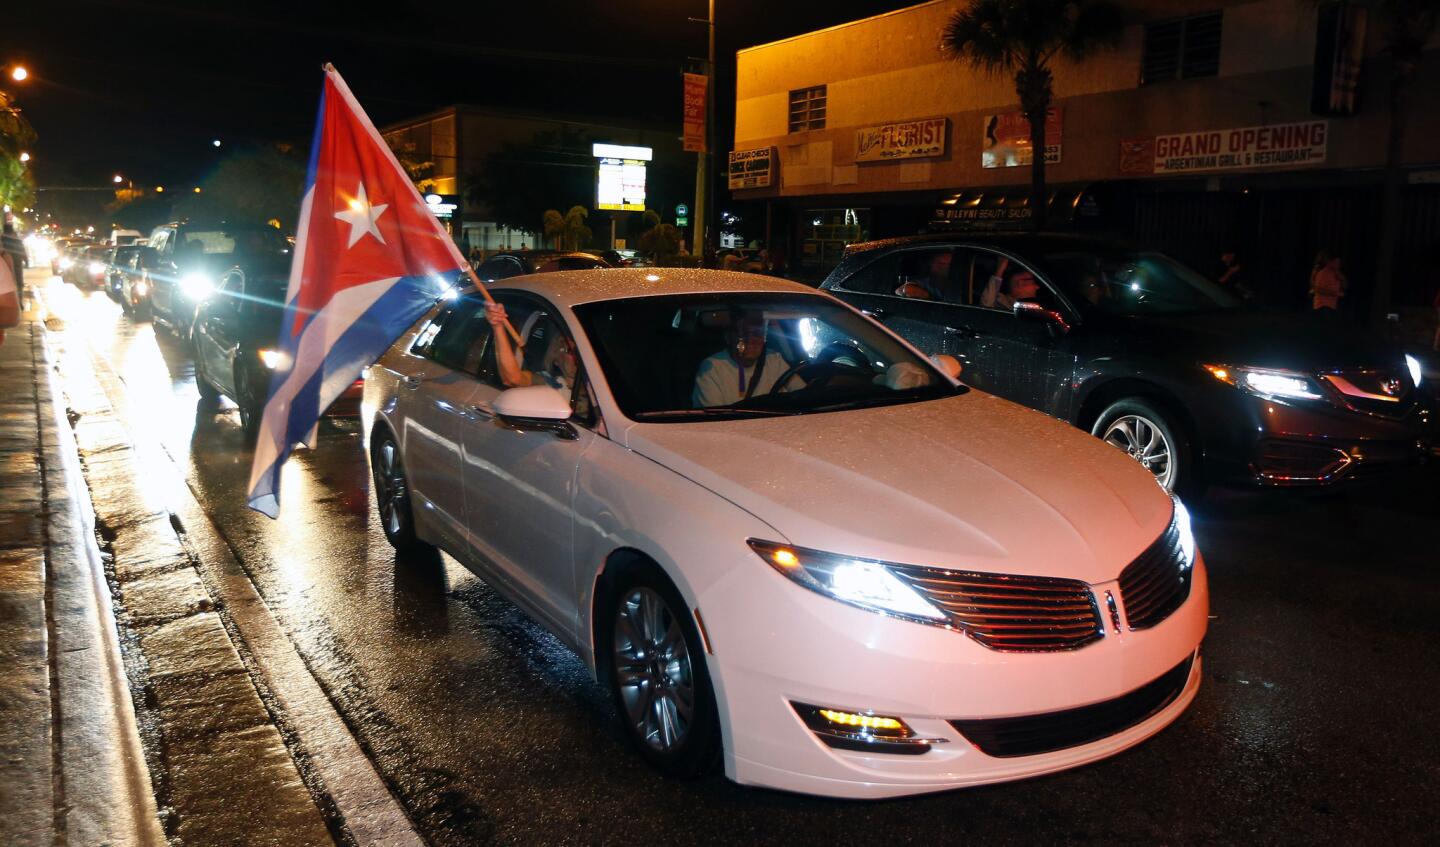 Cubans in Miami